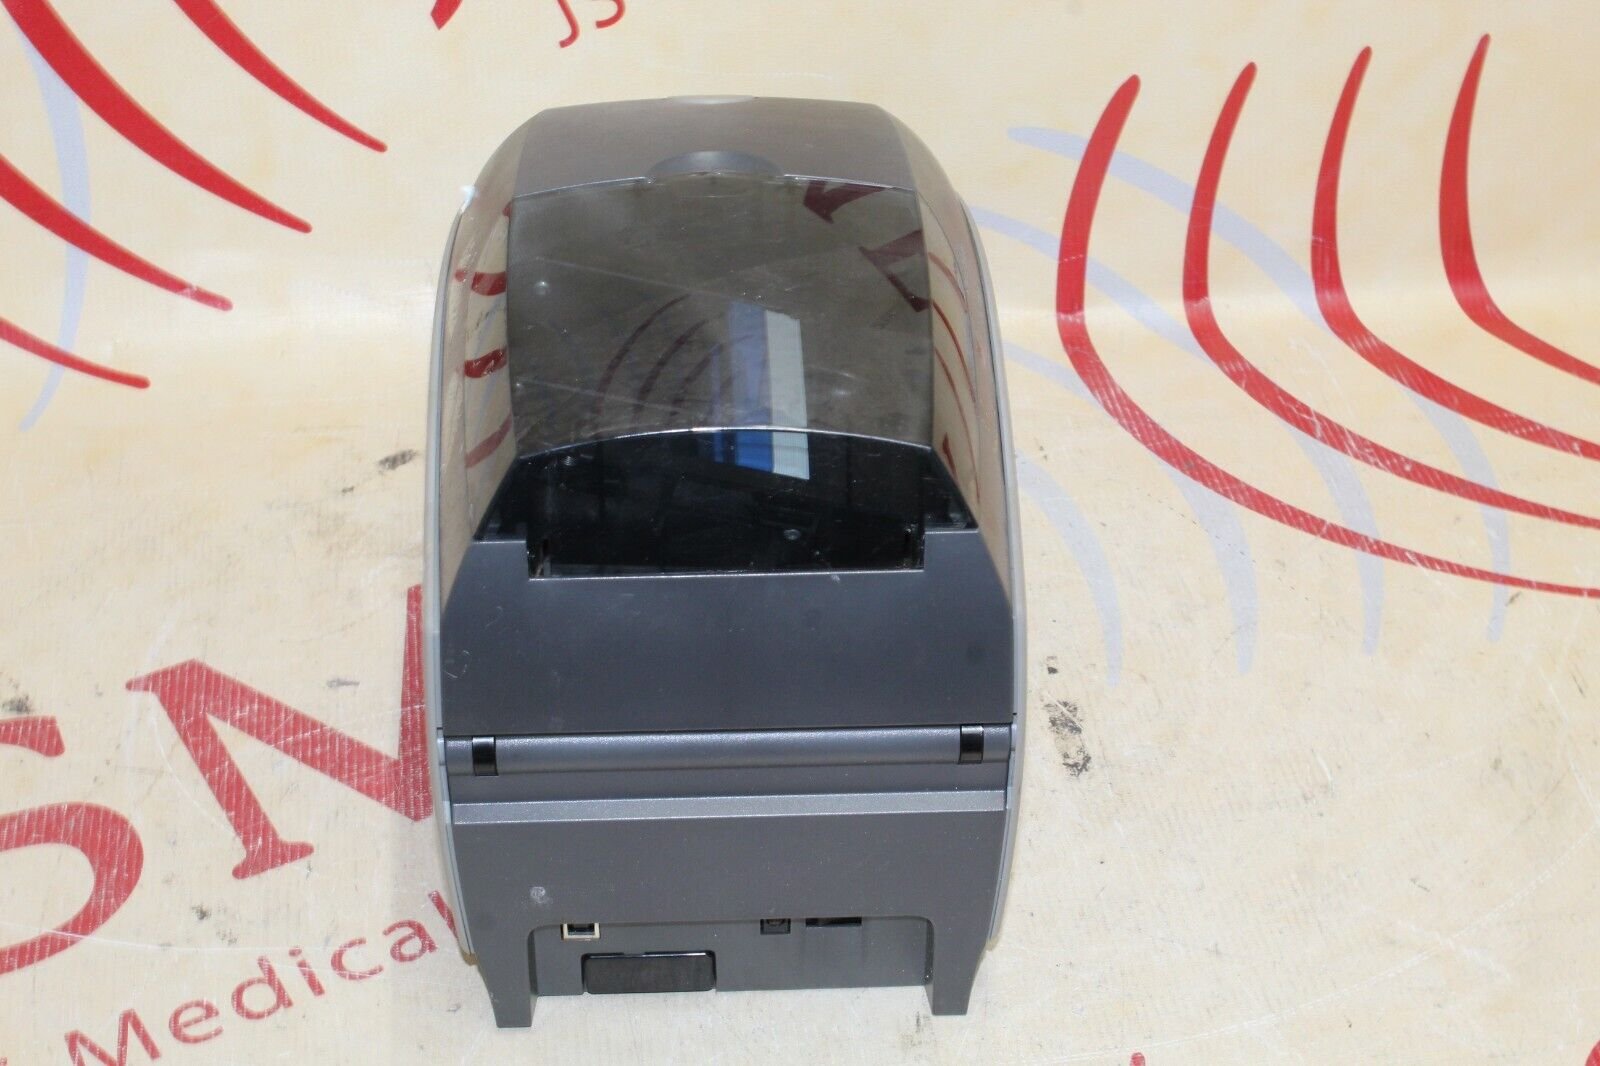 Zebra P110i Id Card Printer Js Medical Equipment 2691